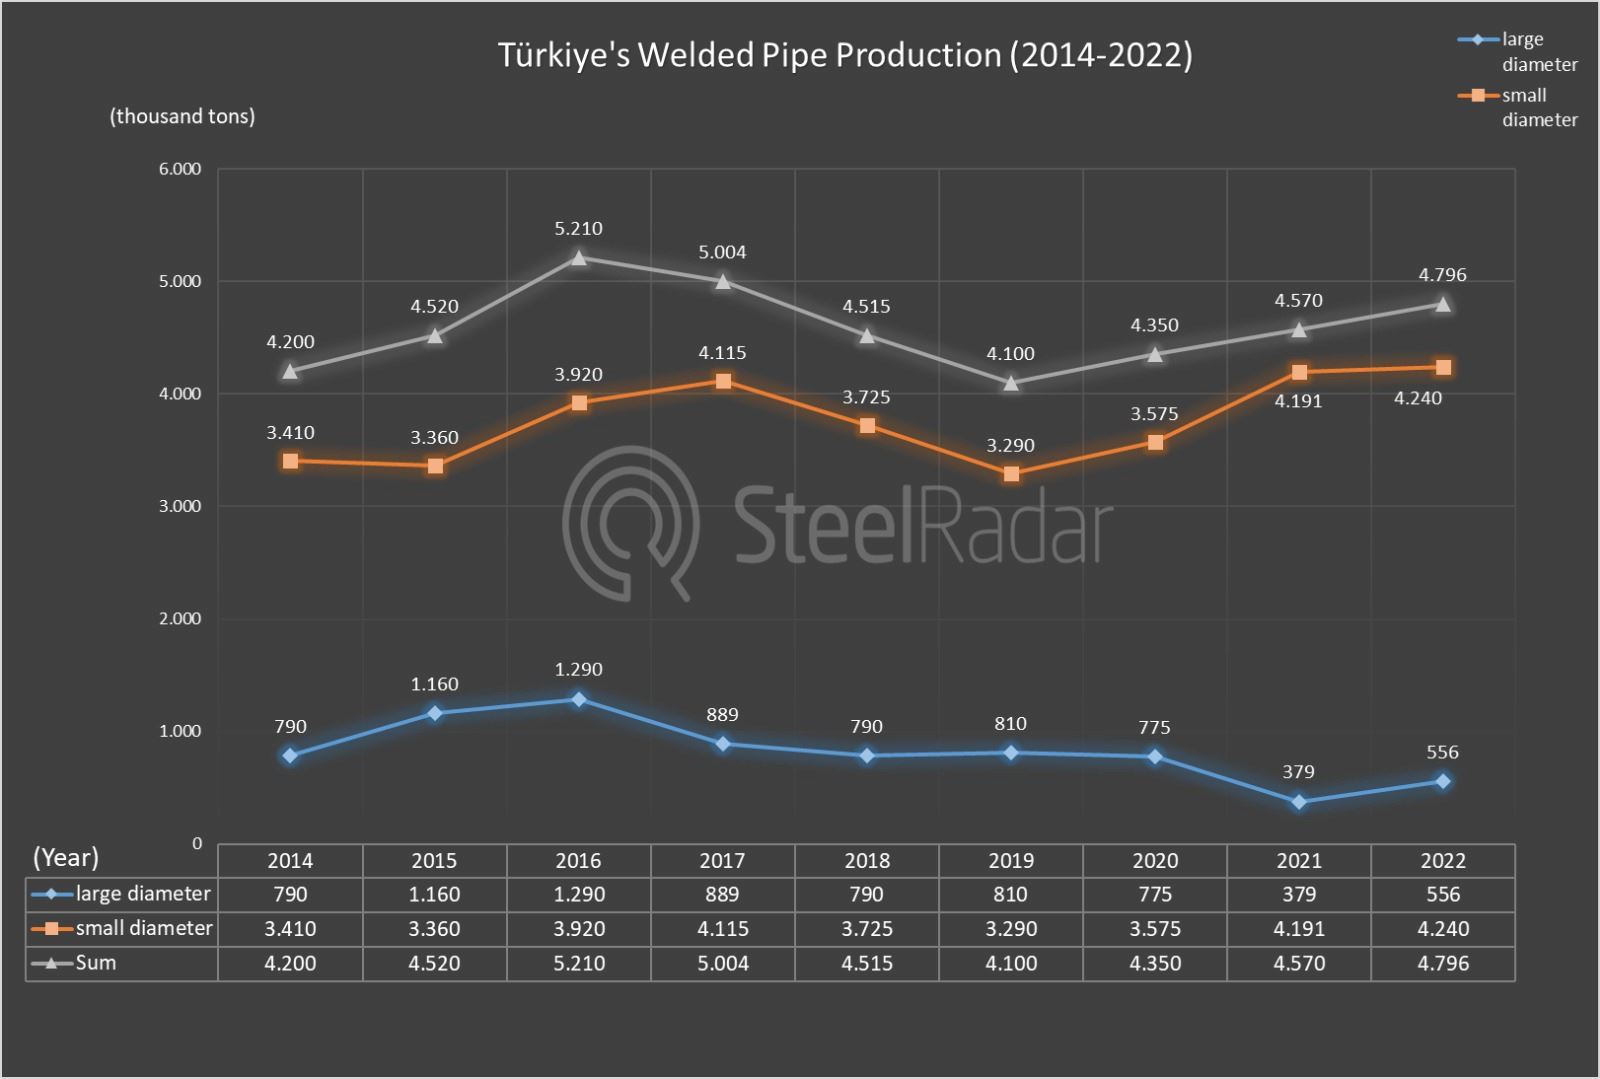 Türkiye's welded steel pipe production decreased